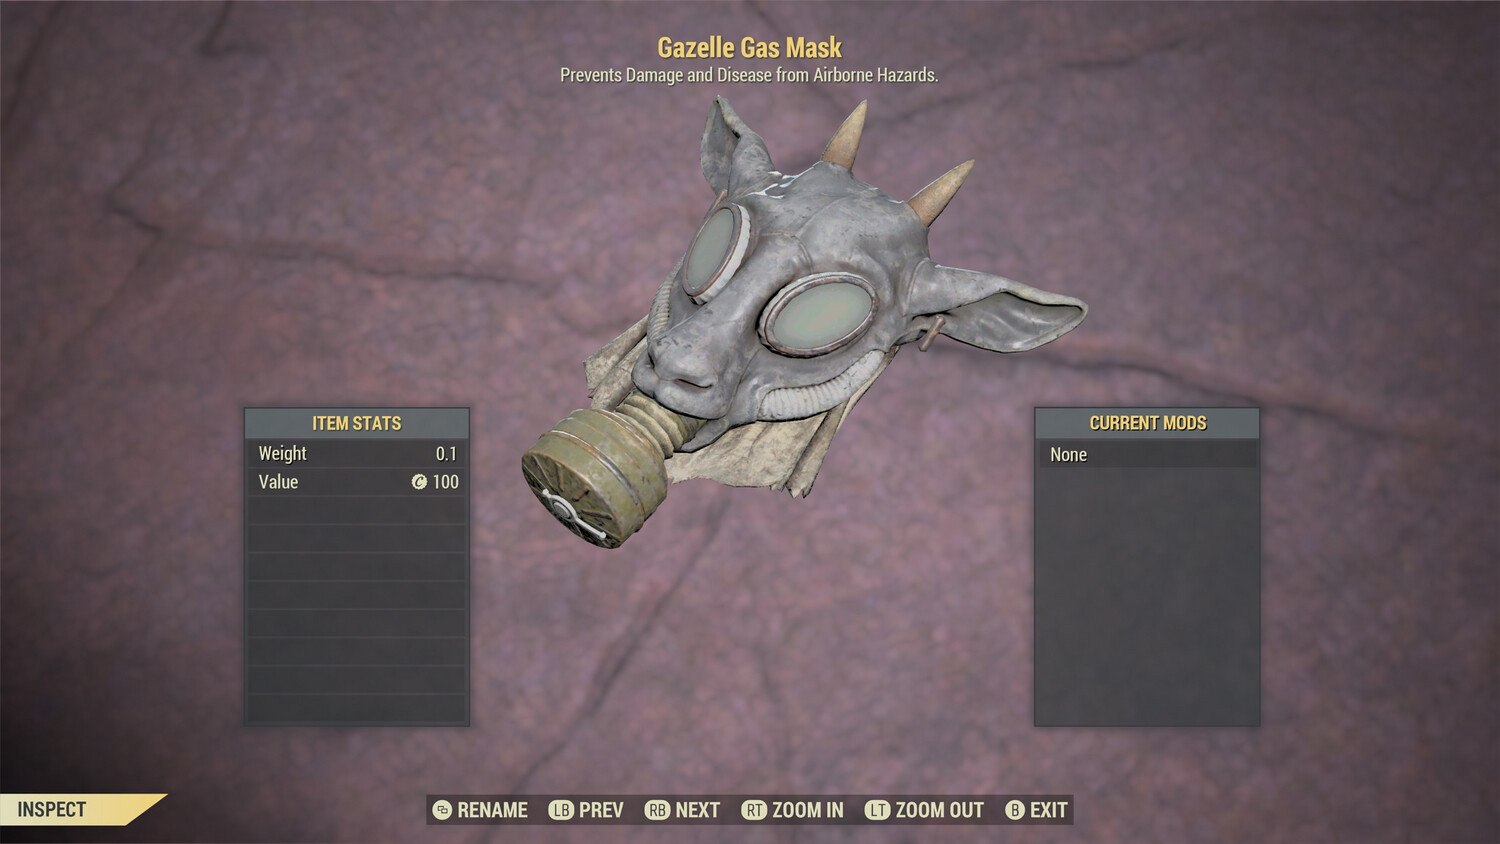 Gazelle Gas Mask